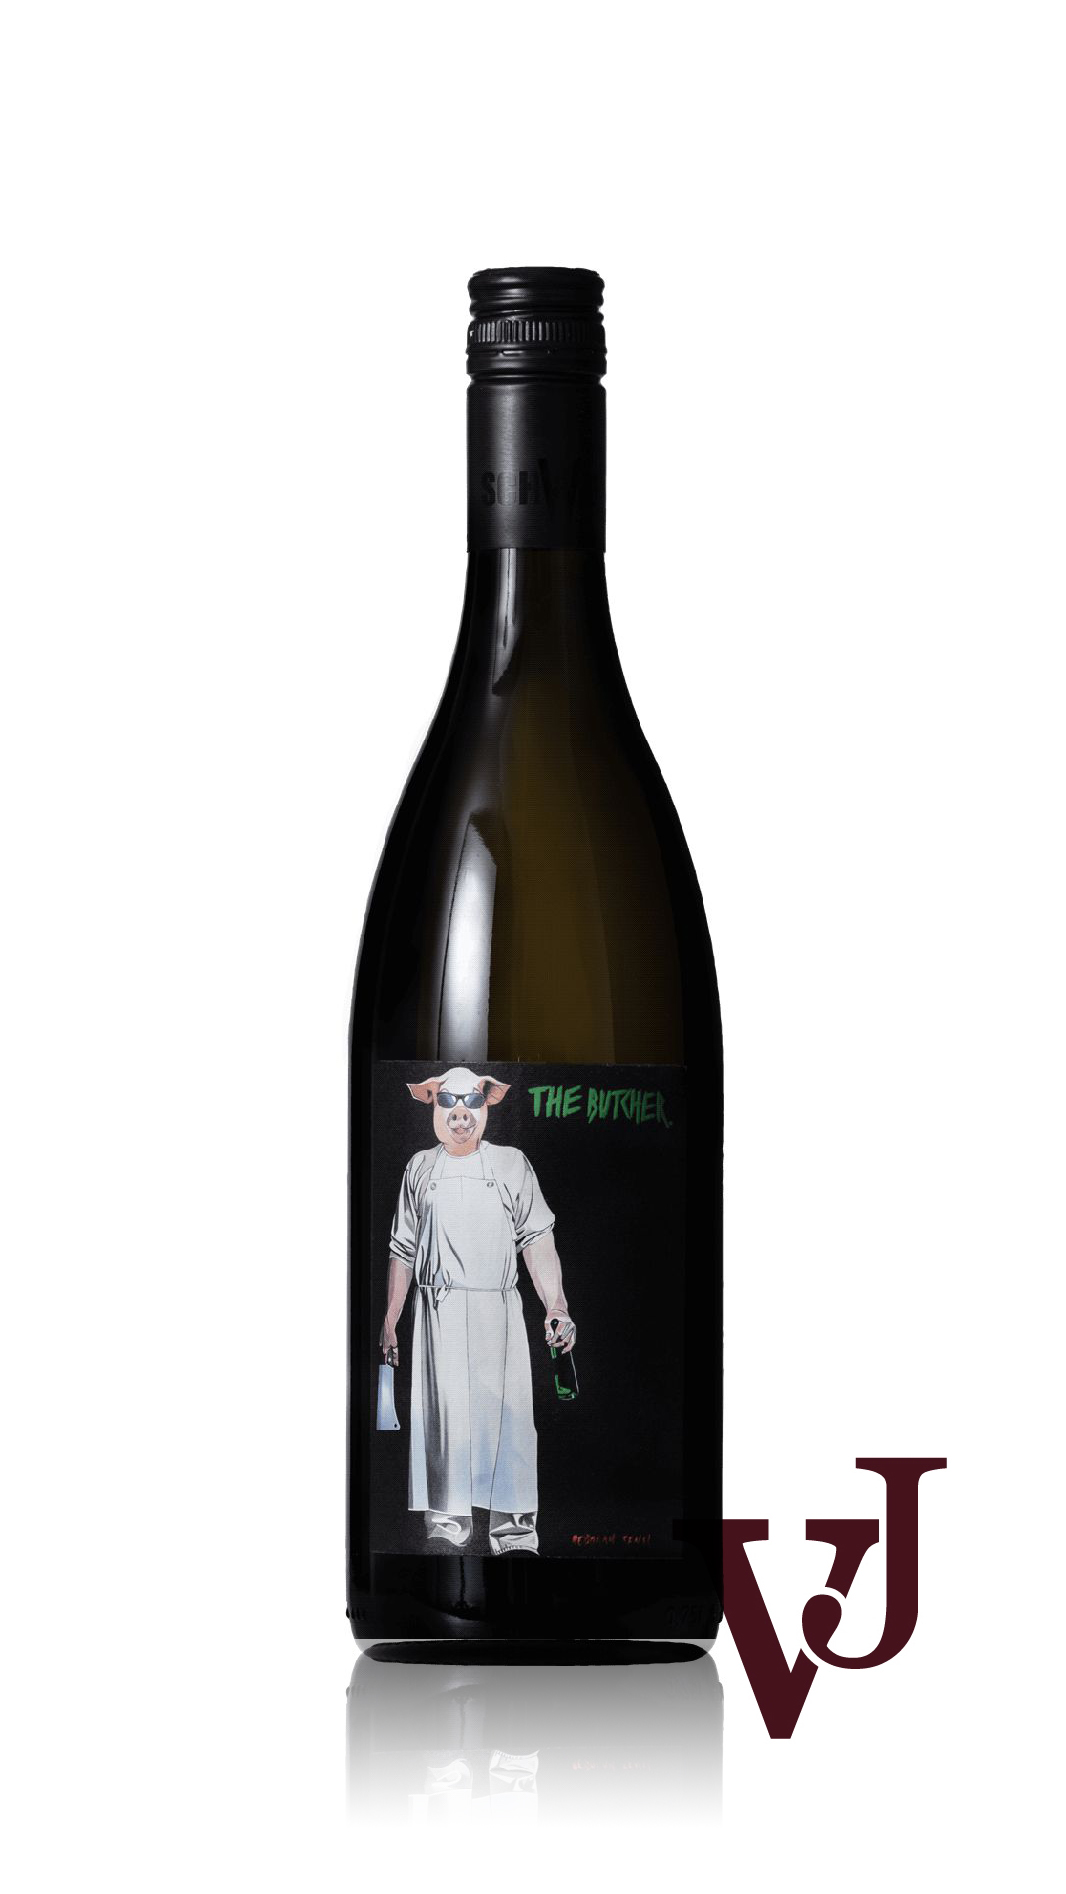 Vitt Vin - The Butcher White Cuvée artikel nummer 7173901 från producenten Schwarz från området Österrike